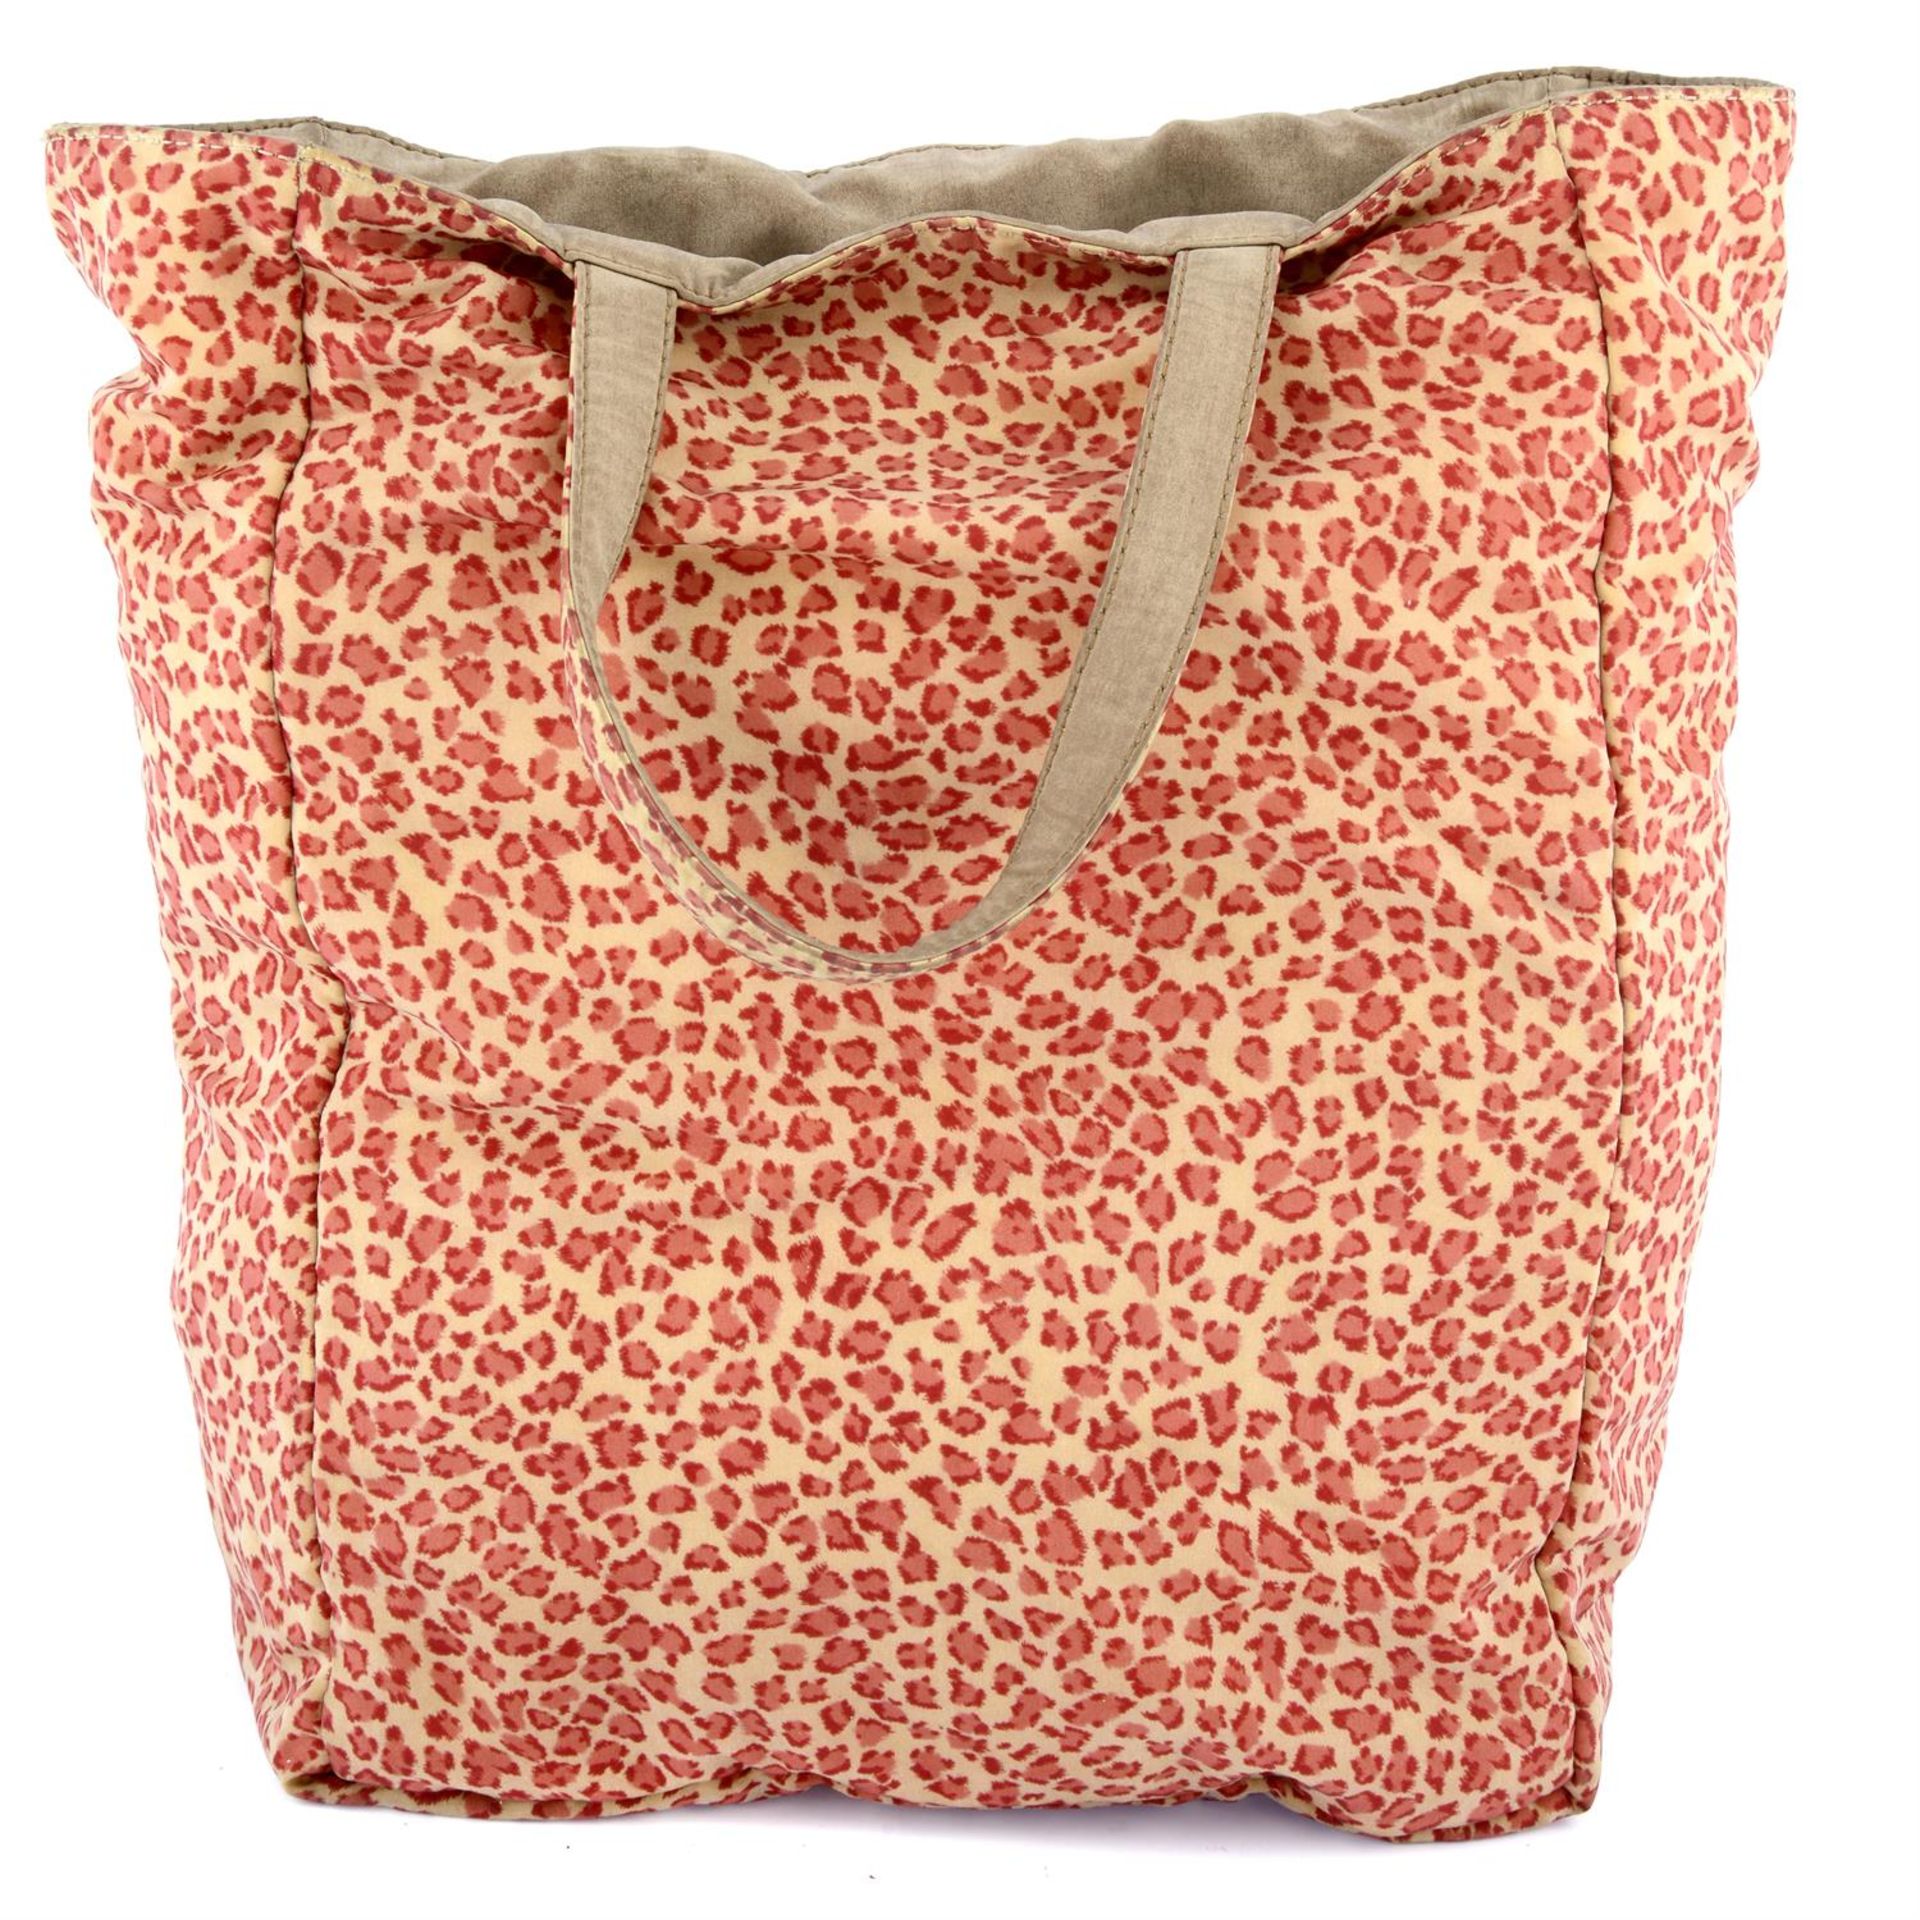 BOTTEGA VENETA - a reversible nylon Leopard print shopping bag. - Image 2 of 4